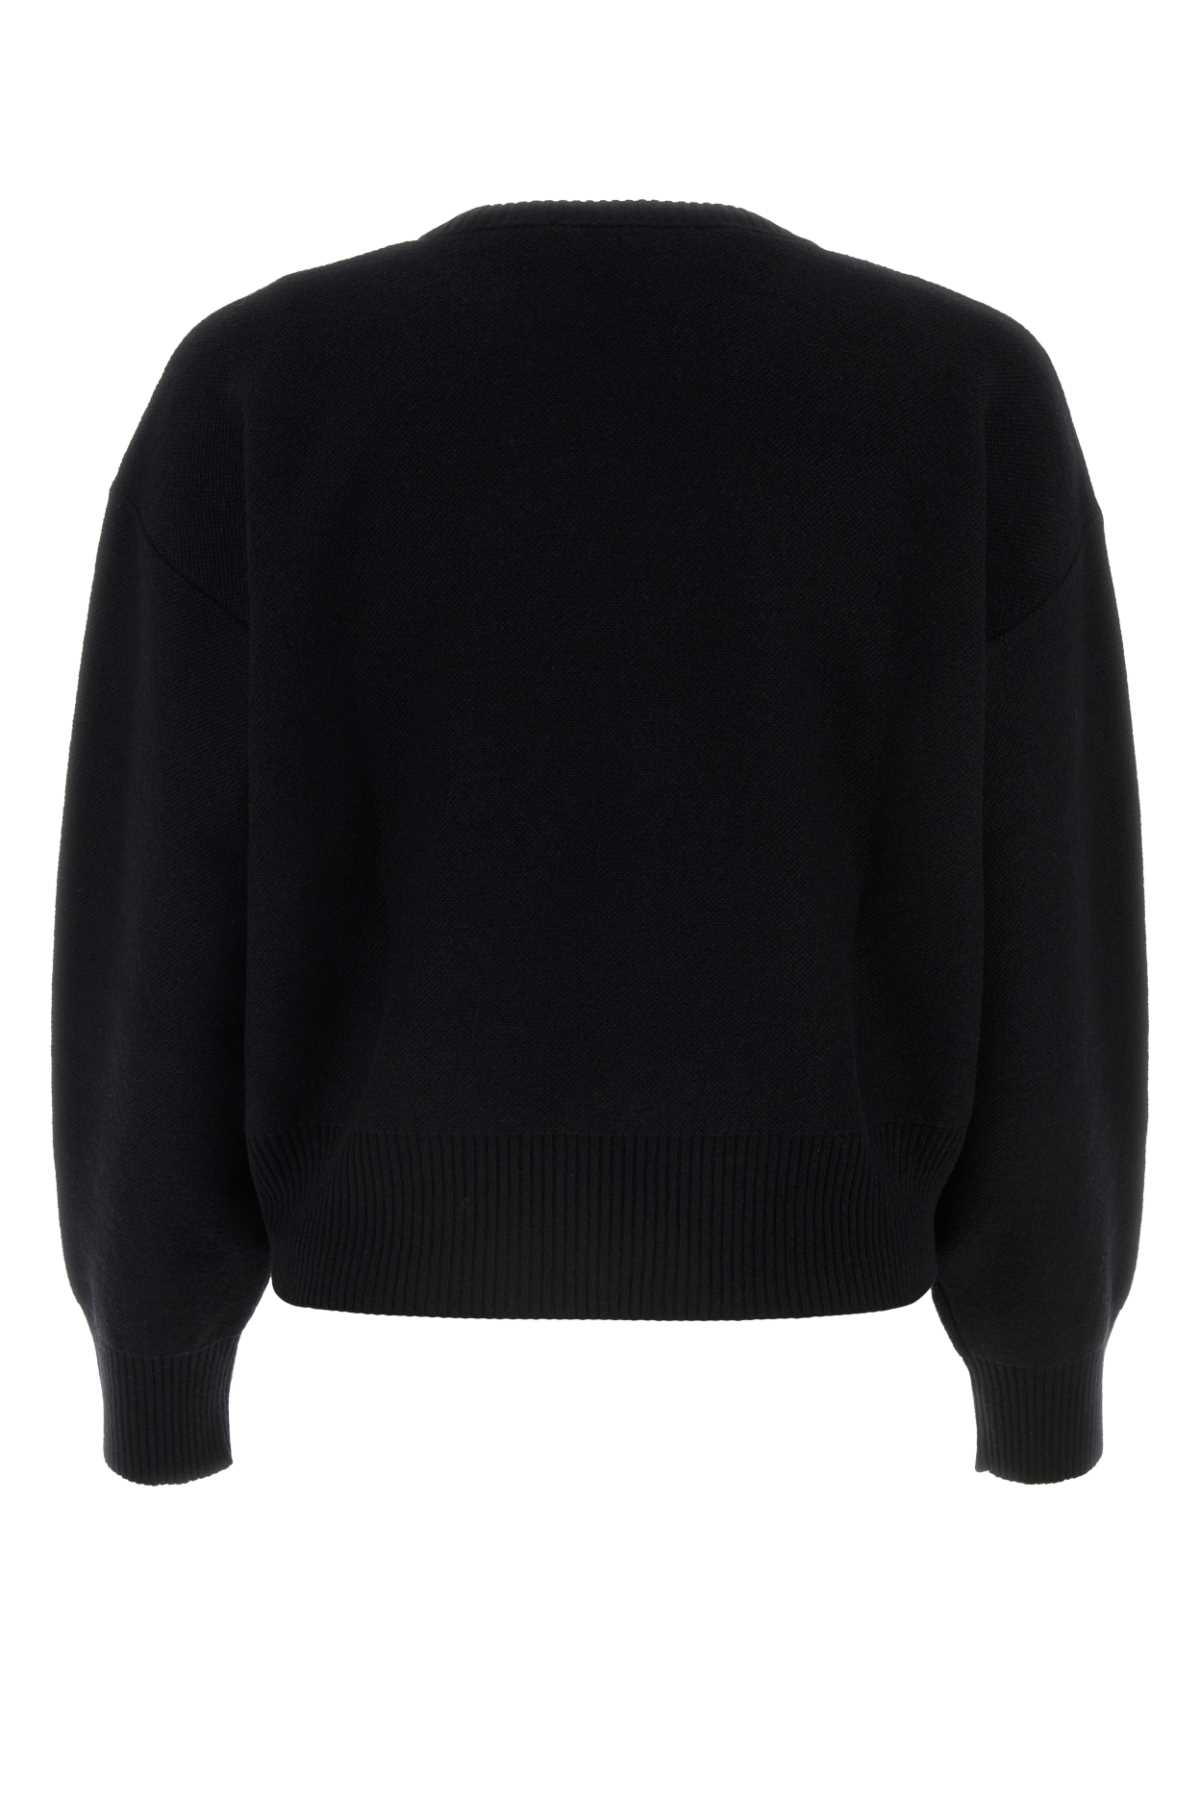 Shop Versace Black Wool Blend Oversize Sweater